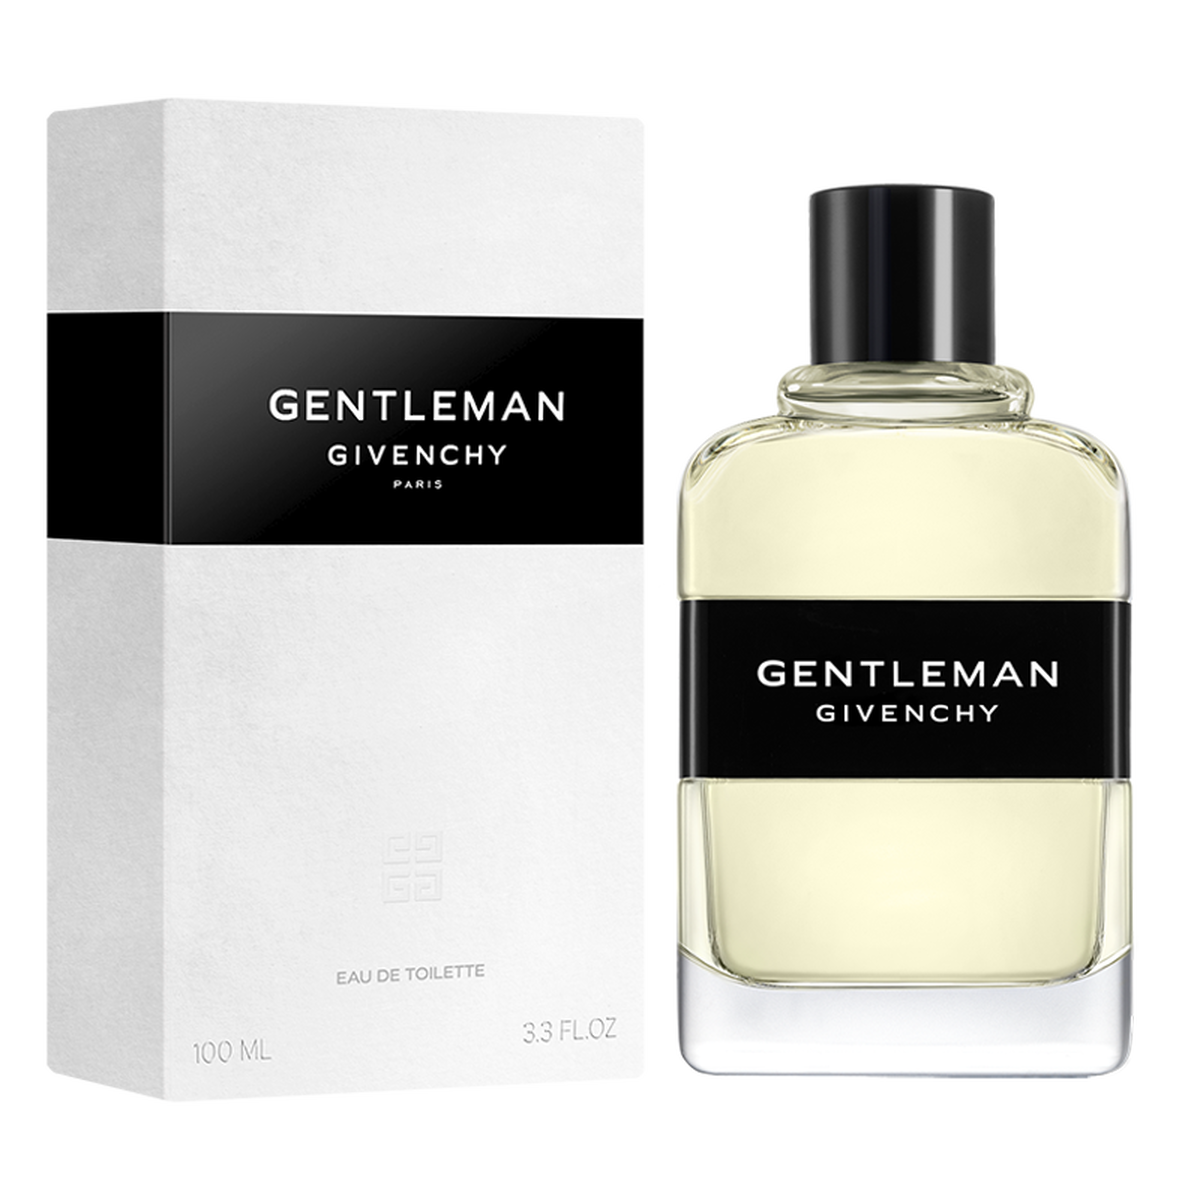 Gentleman Givenchy - Eau de toilette woody, floral, fougere | Givenchy  Beauty